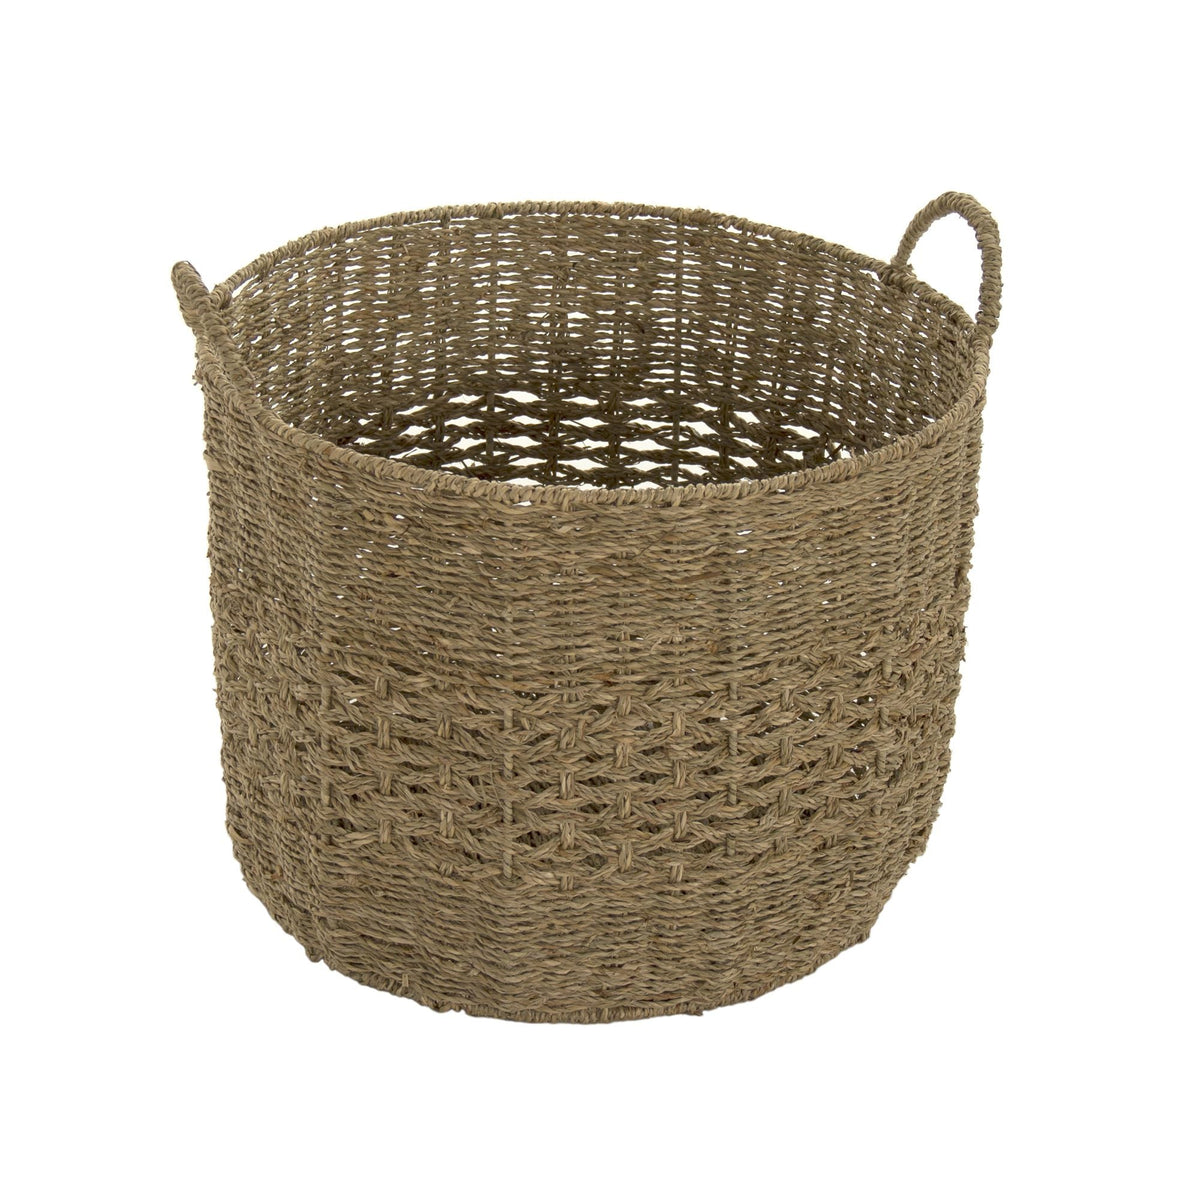 Woven Metal Basket by Zentique